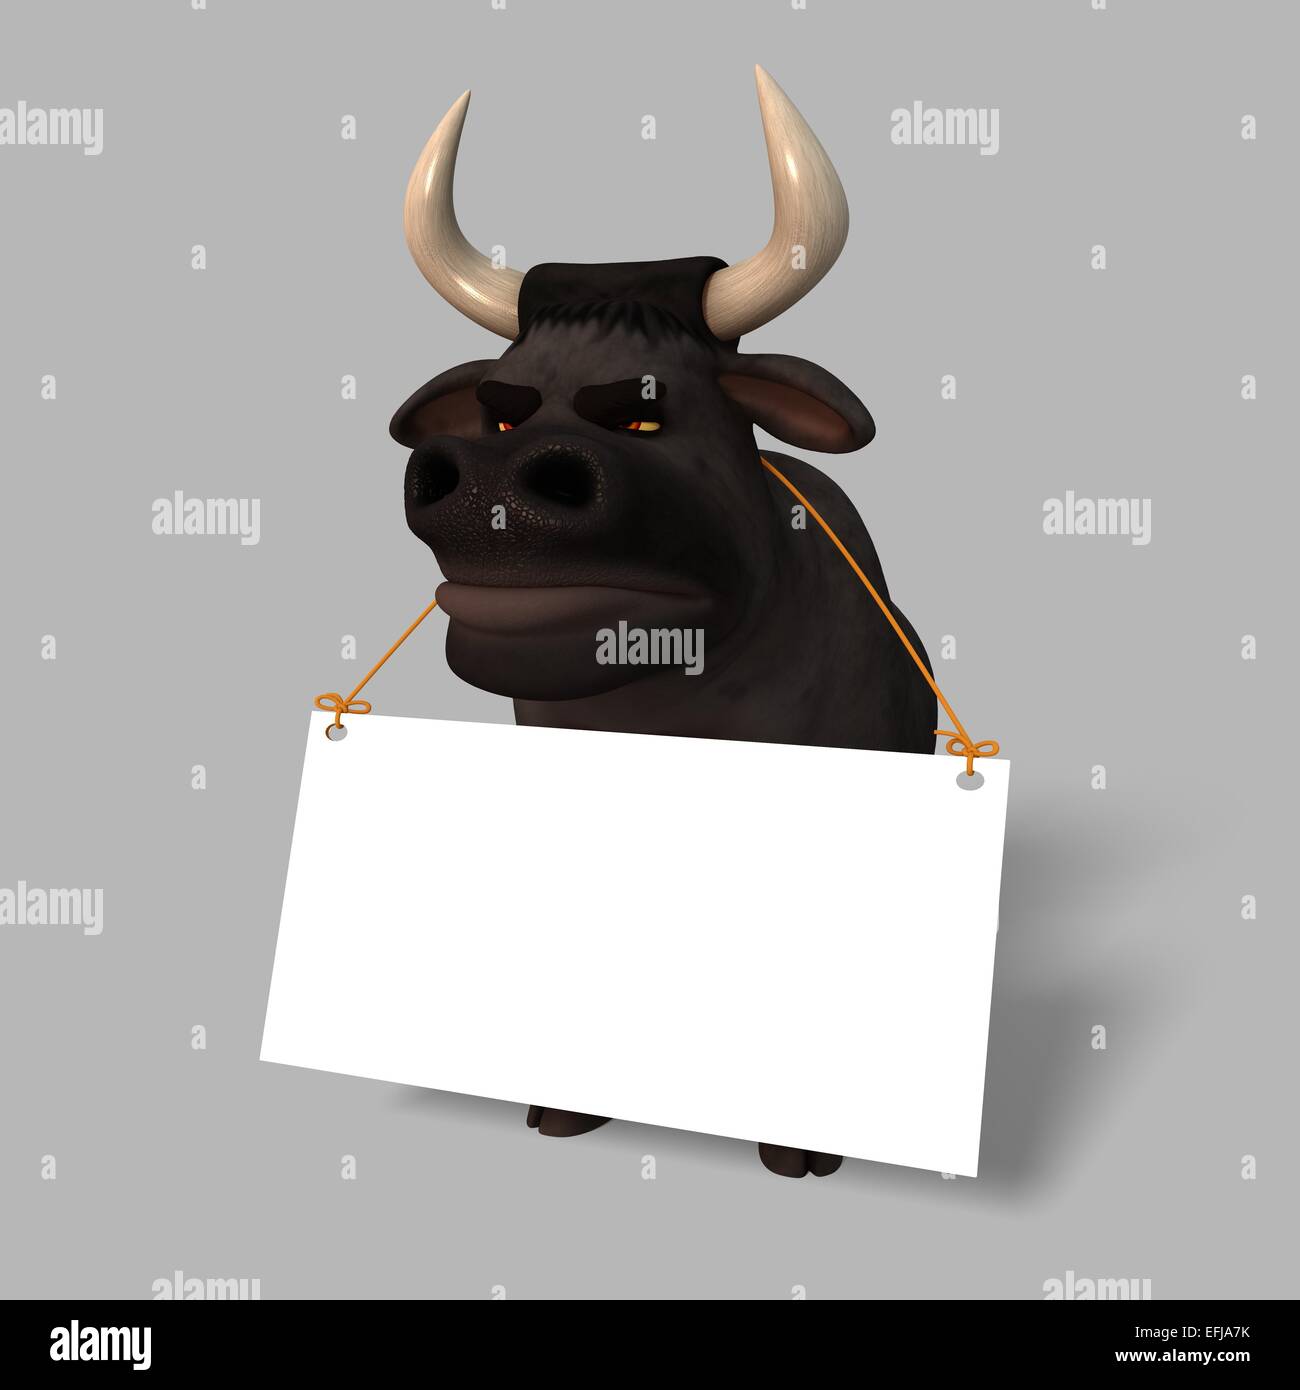 Toro caricatura fotografías e imágenes de alta resolución - Alamy